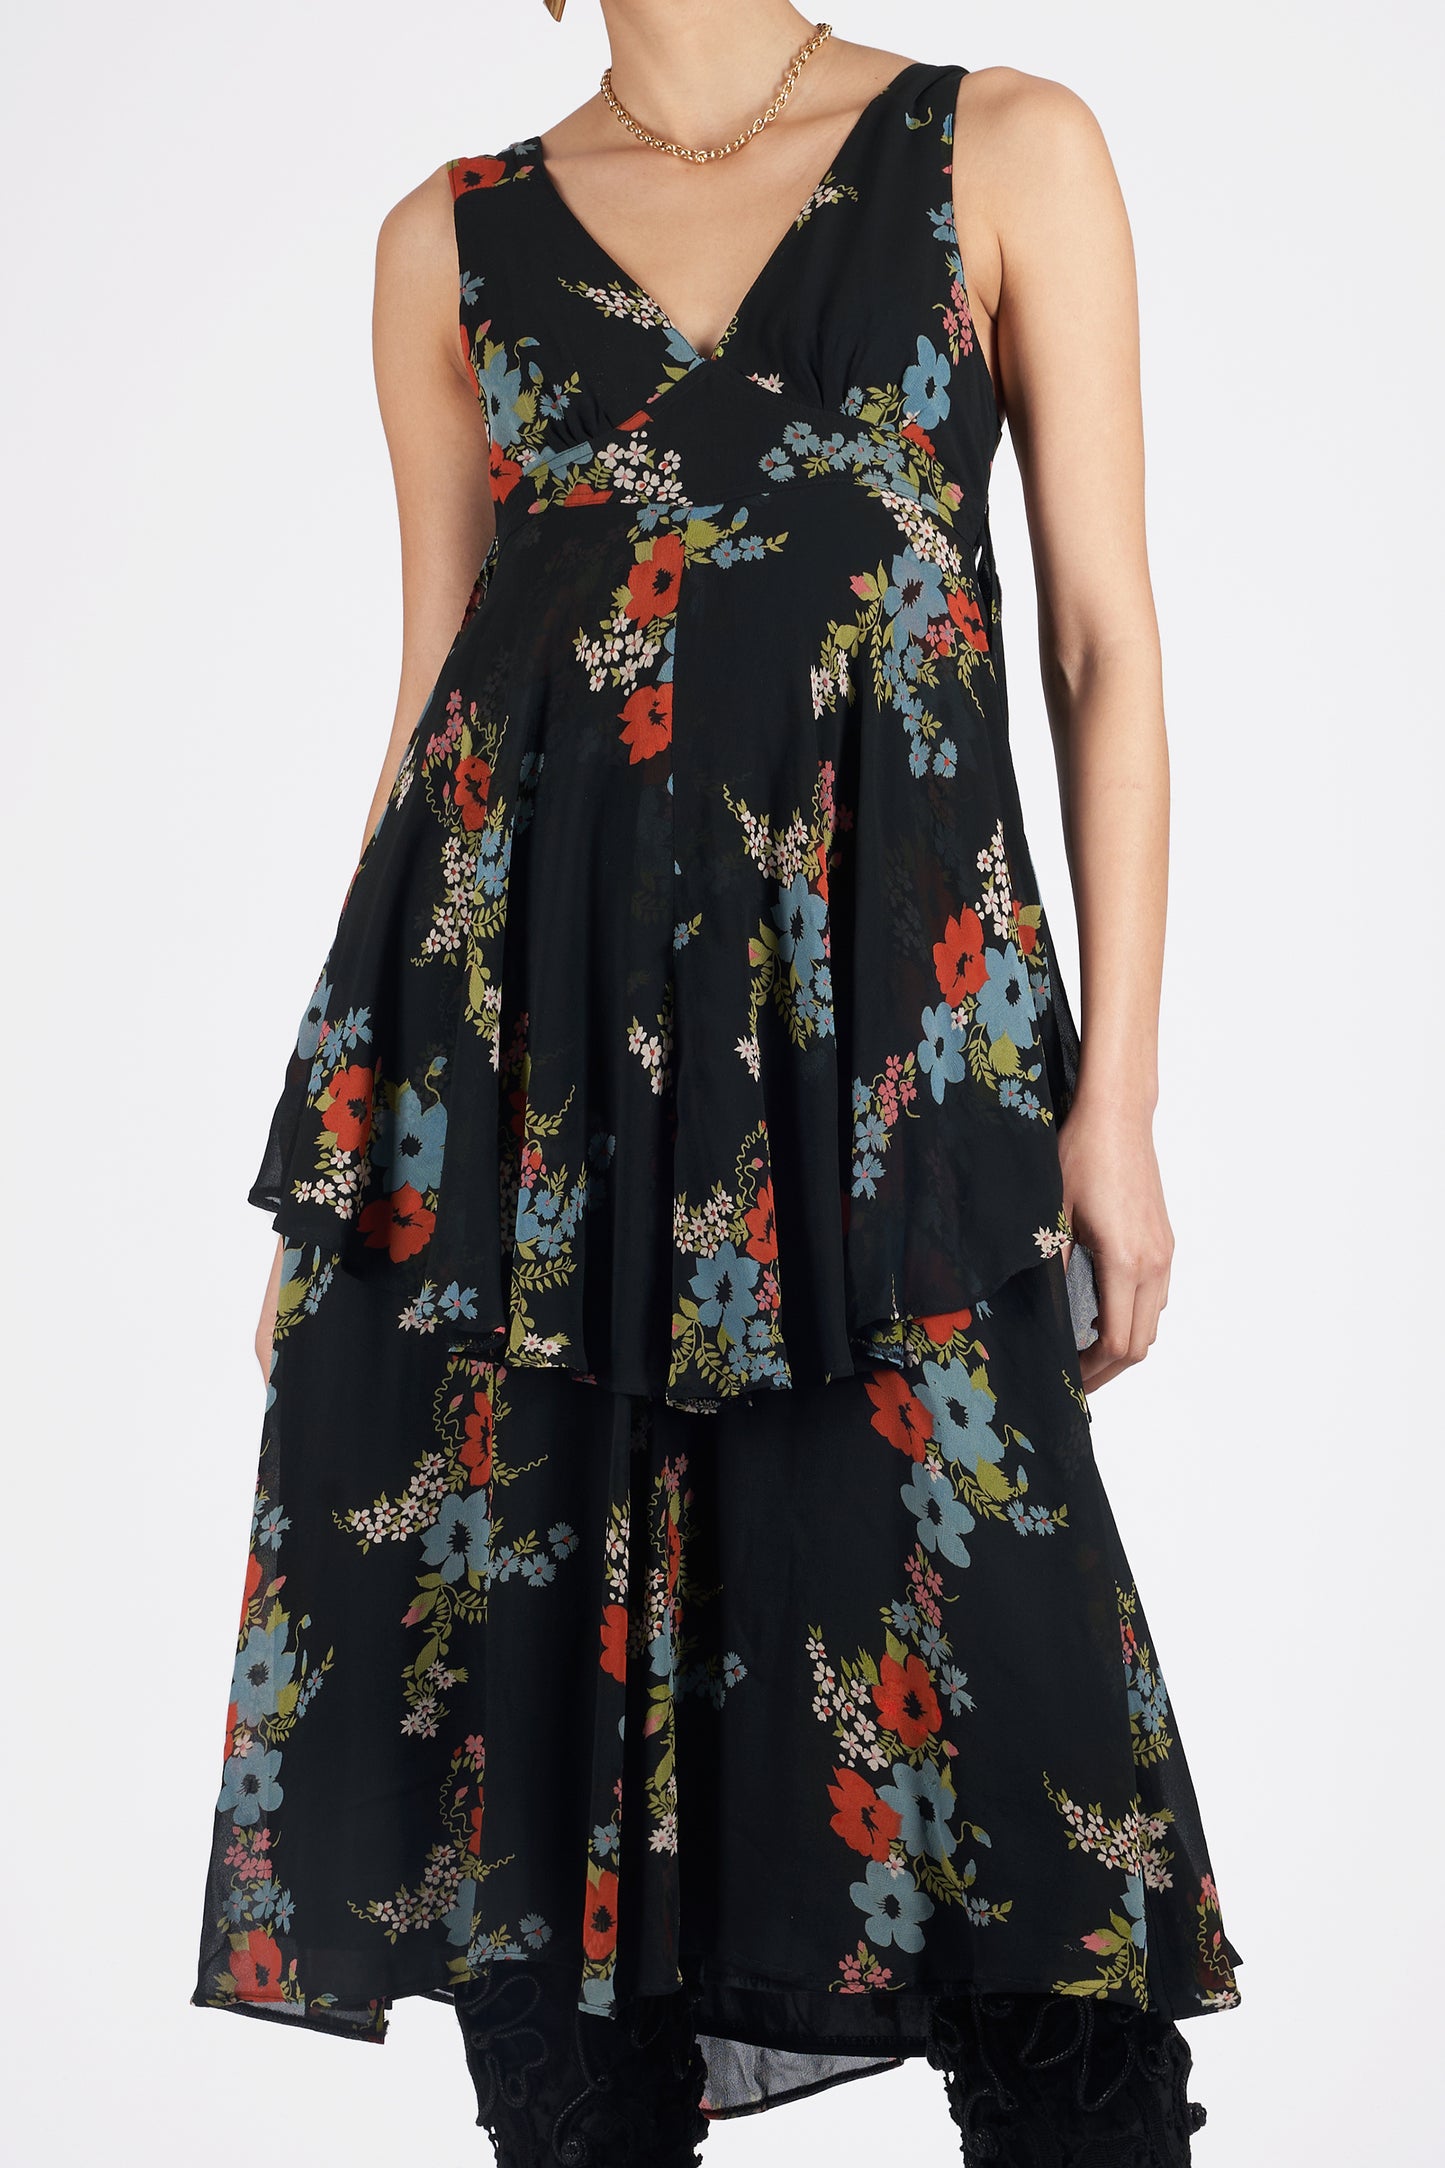 Vintage 1970’s Sleeveless Floral Layered Dress